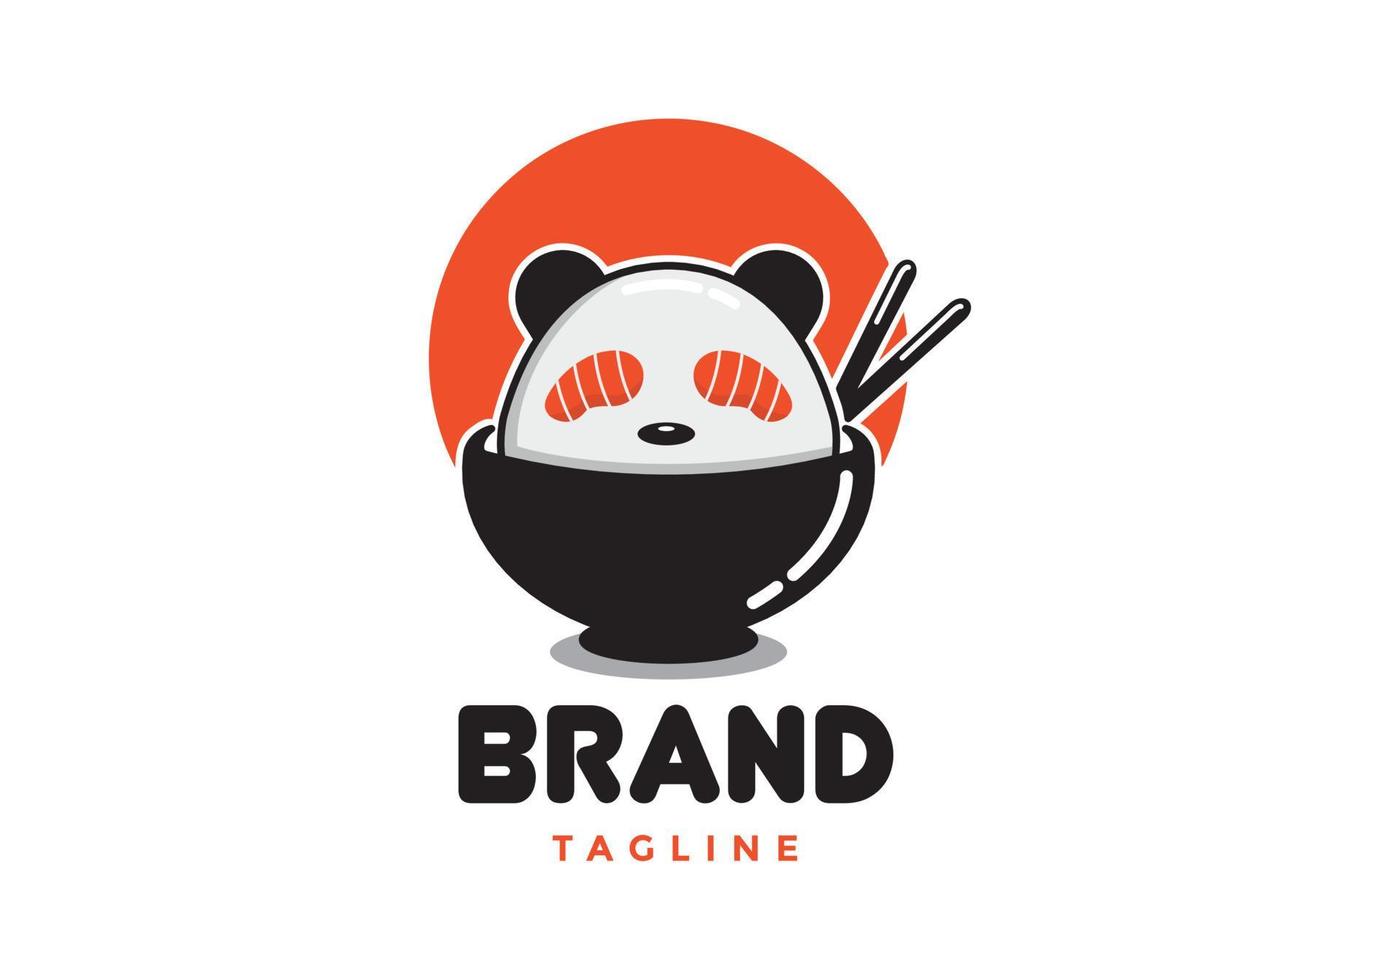 pequeno logotipo do panda, adequado para marcas de comida de sushi, restaurantes, cafés e outros. vetor